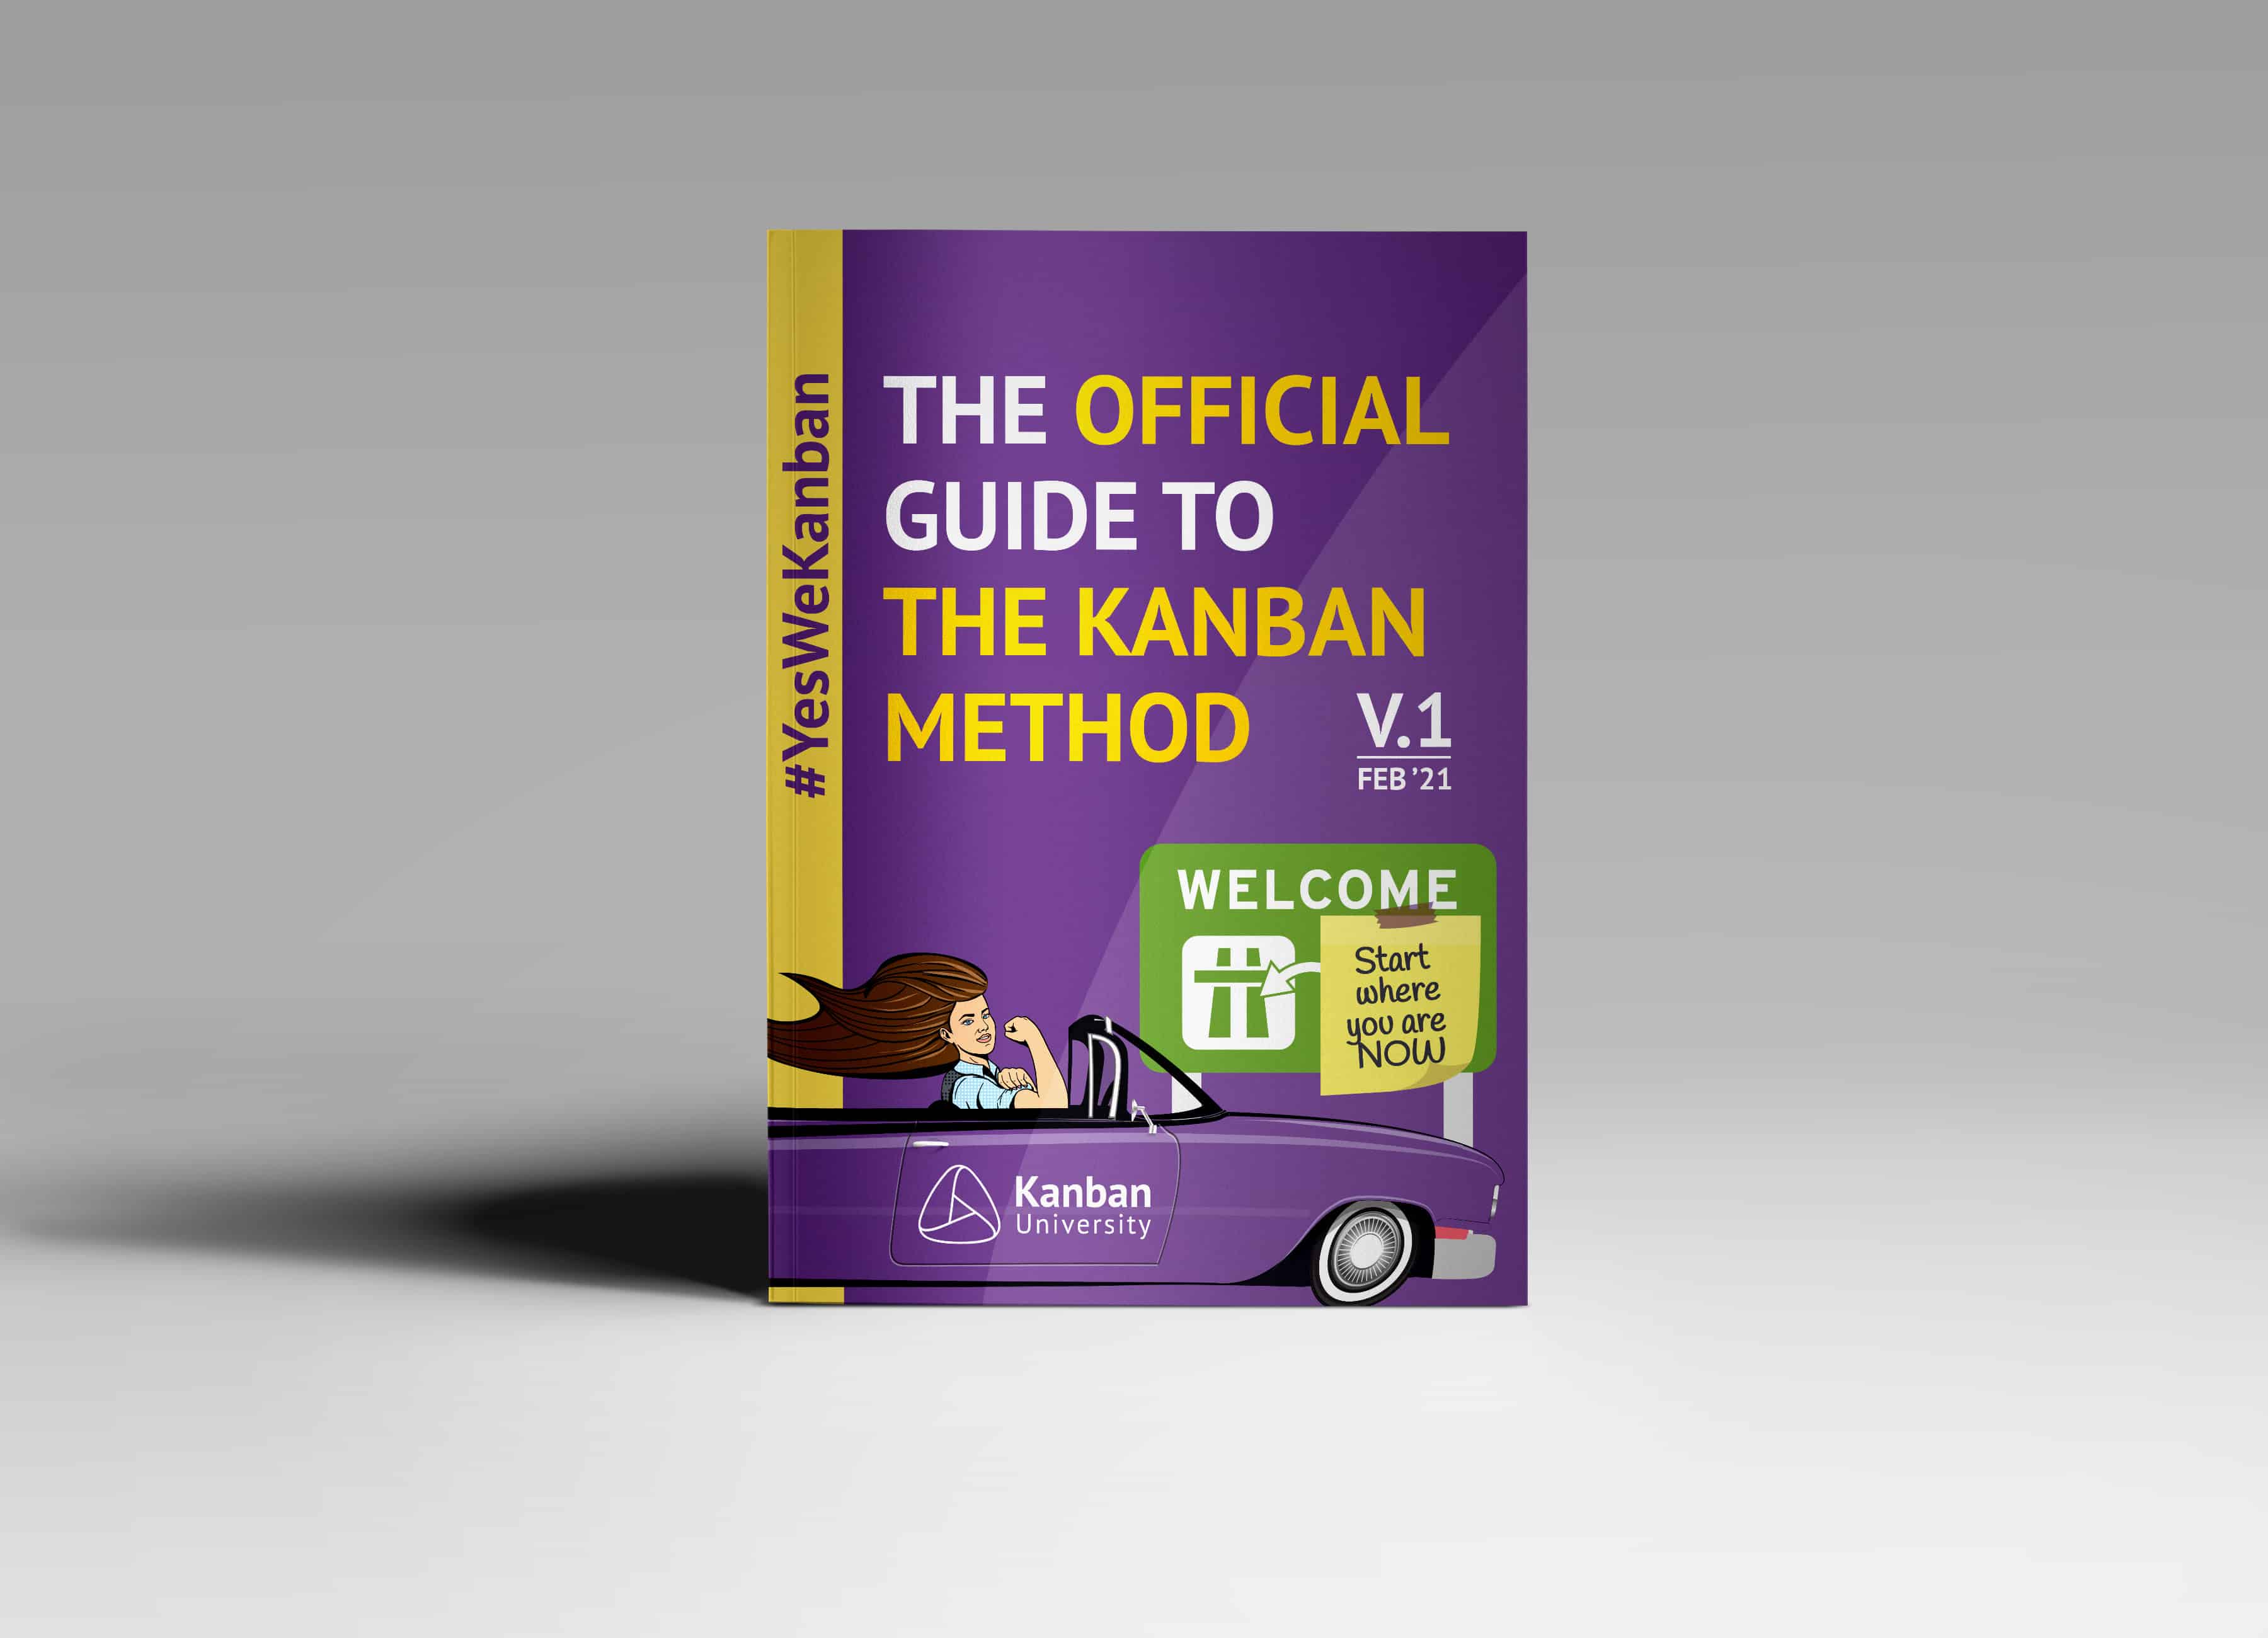 The Official Kanban Guide V1 by Kanban University